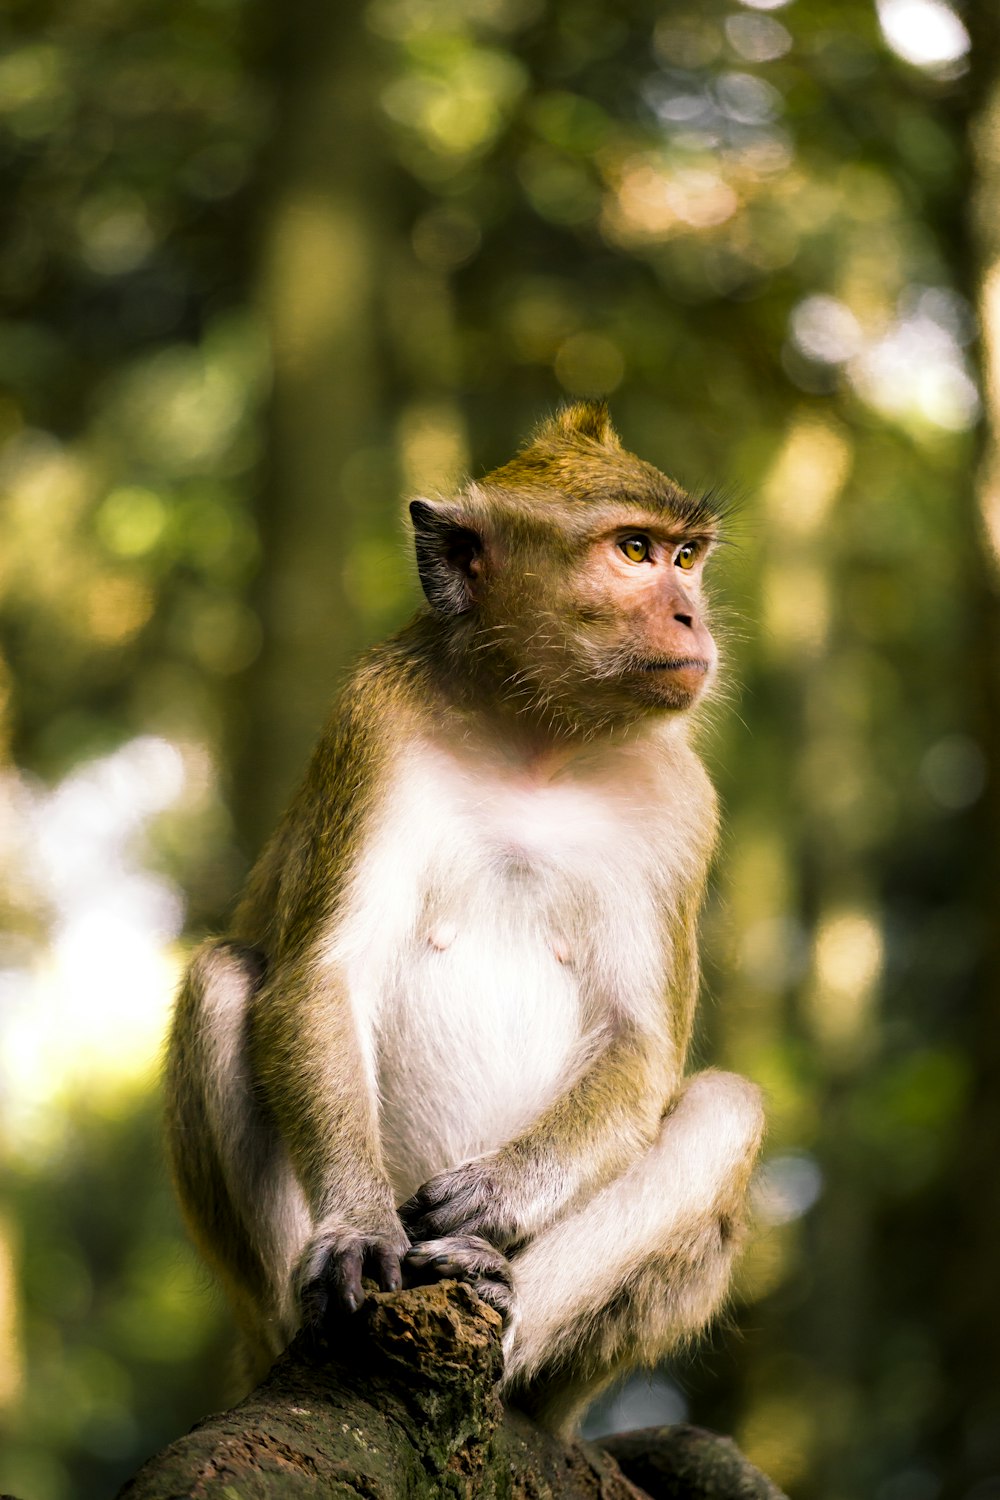 a monkey sitting on a tree branch